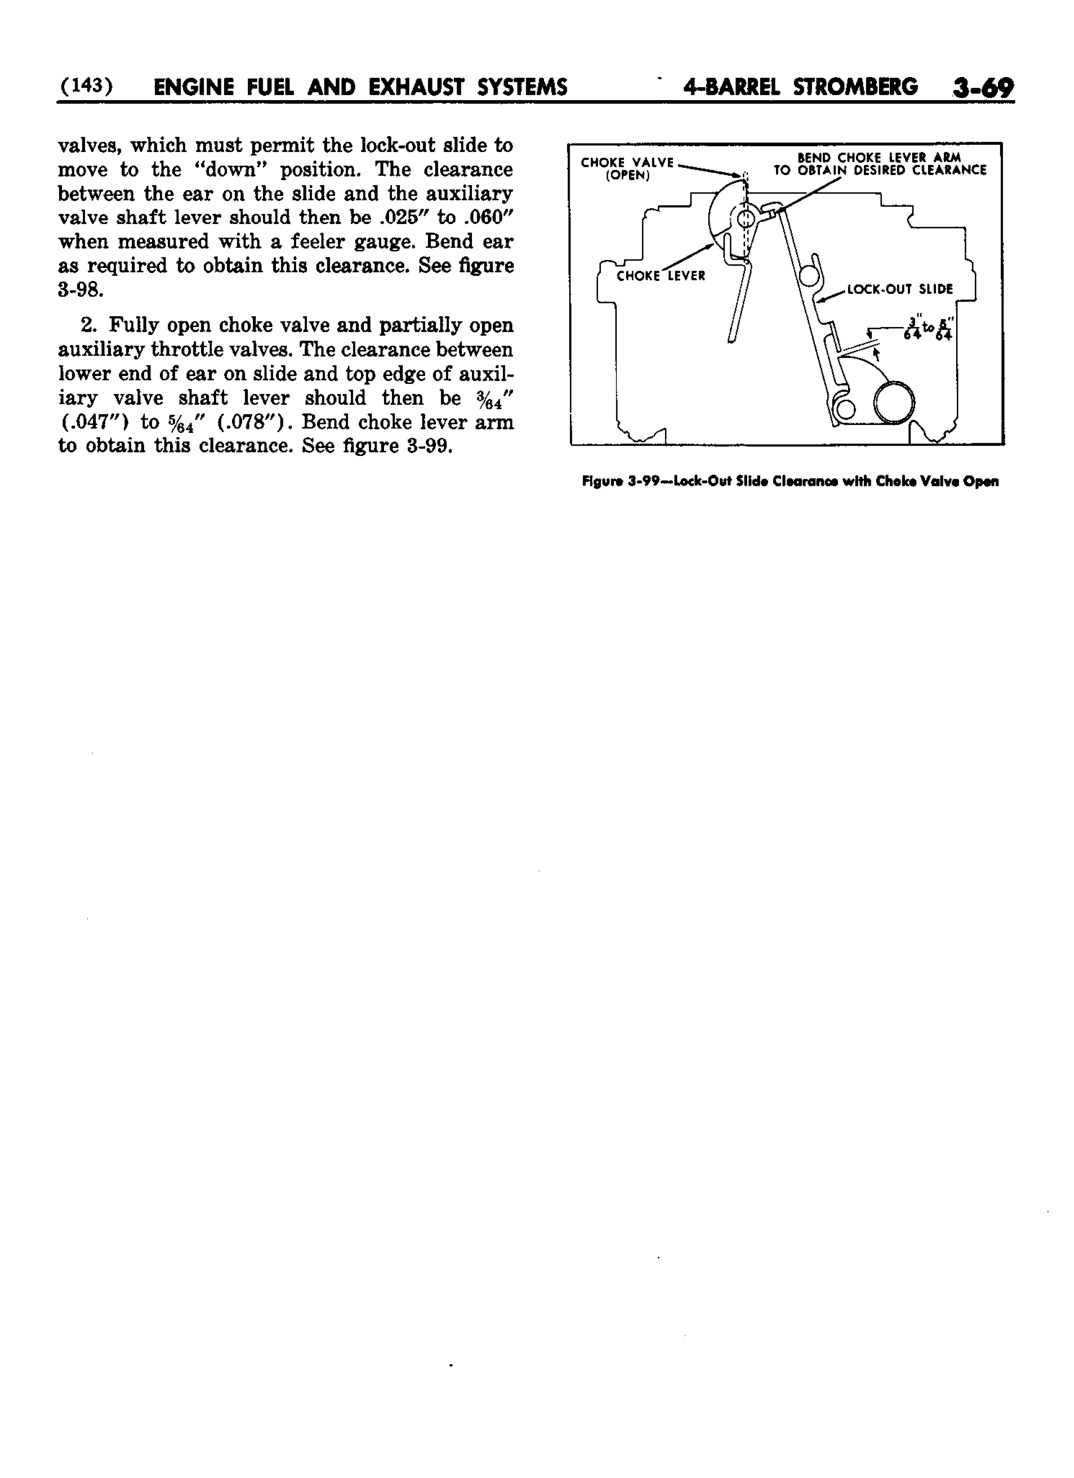 n_04 1952 Buick Shop Manual - Engine Fuel & Exhaust-069-069.jpg